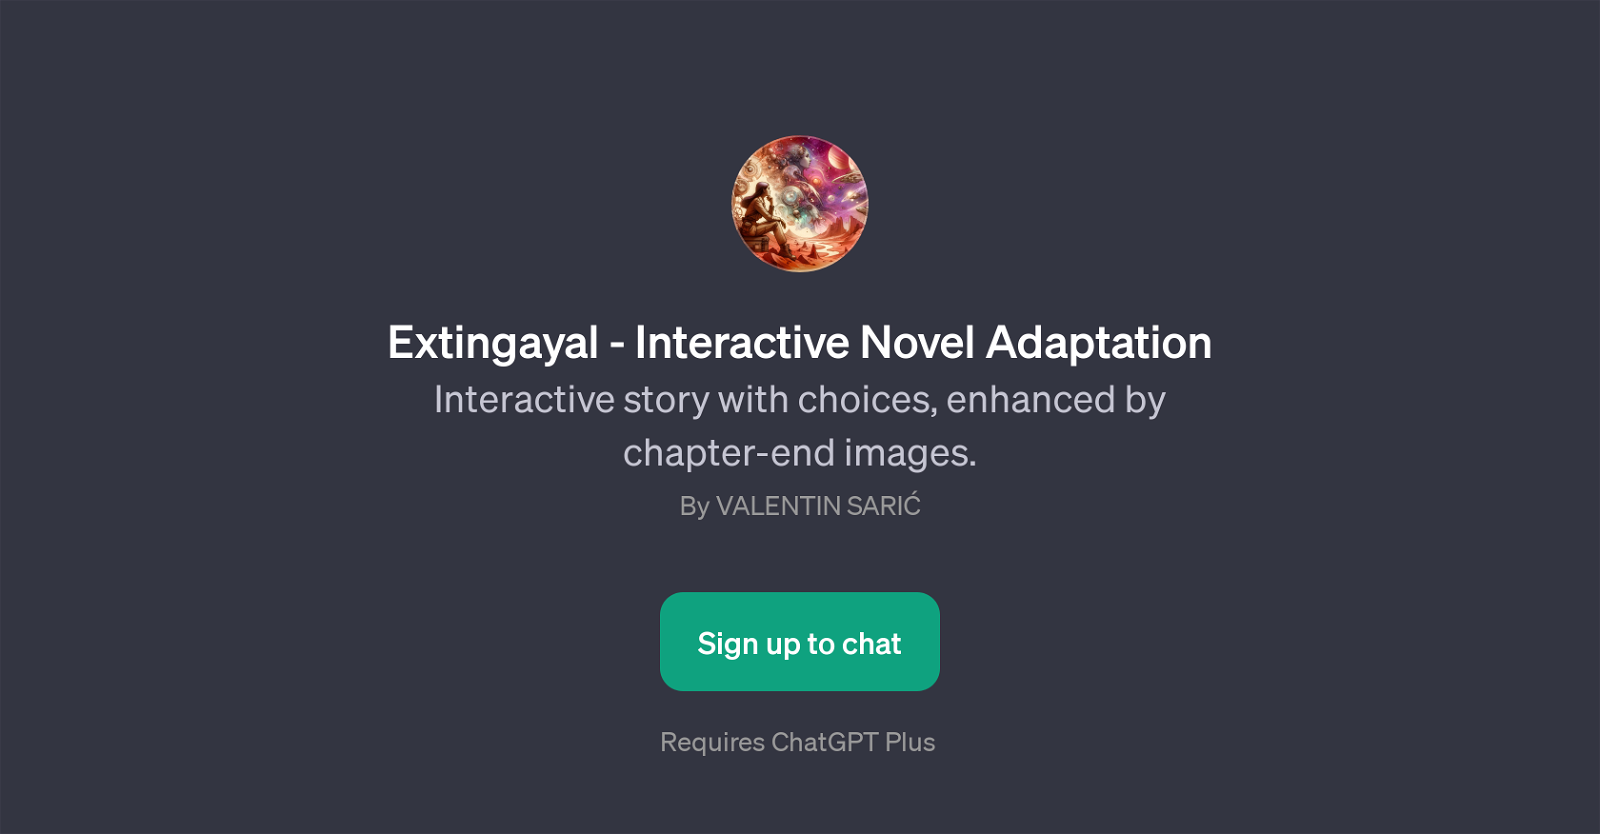 Extingayal - Interactive Novel Adaptation website